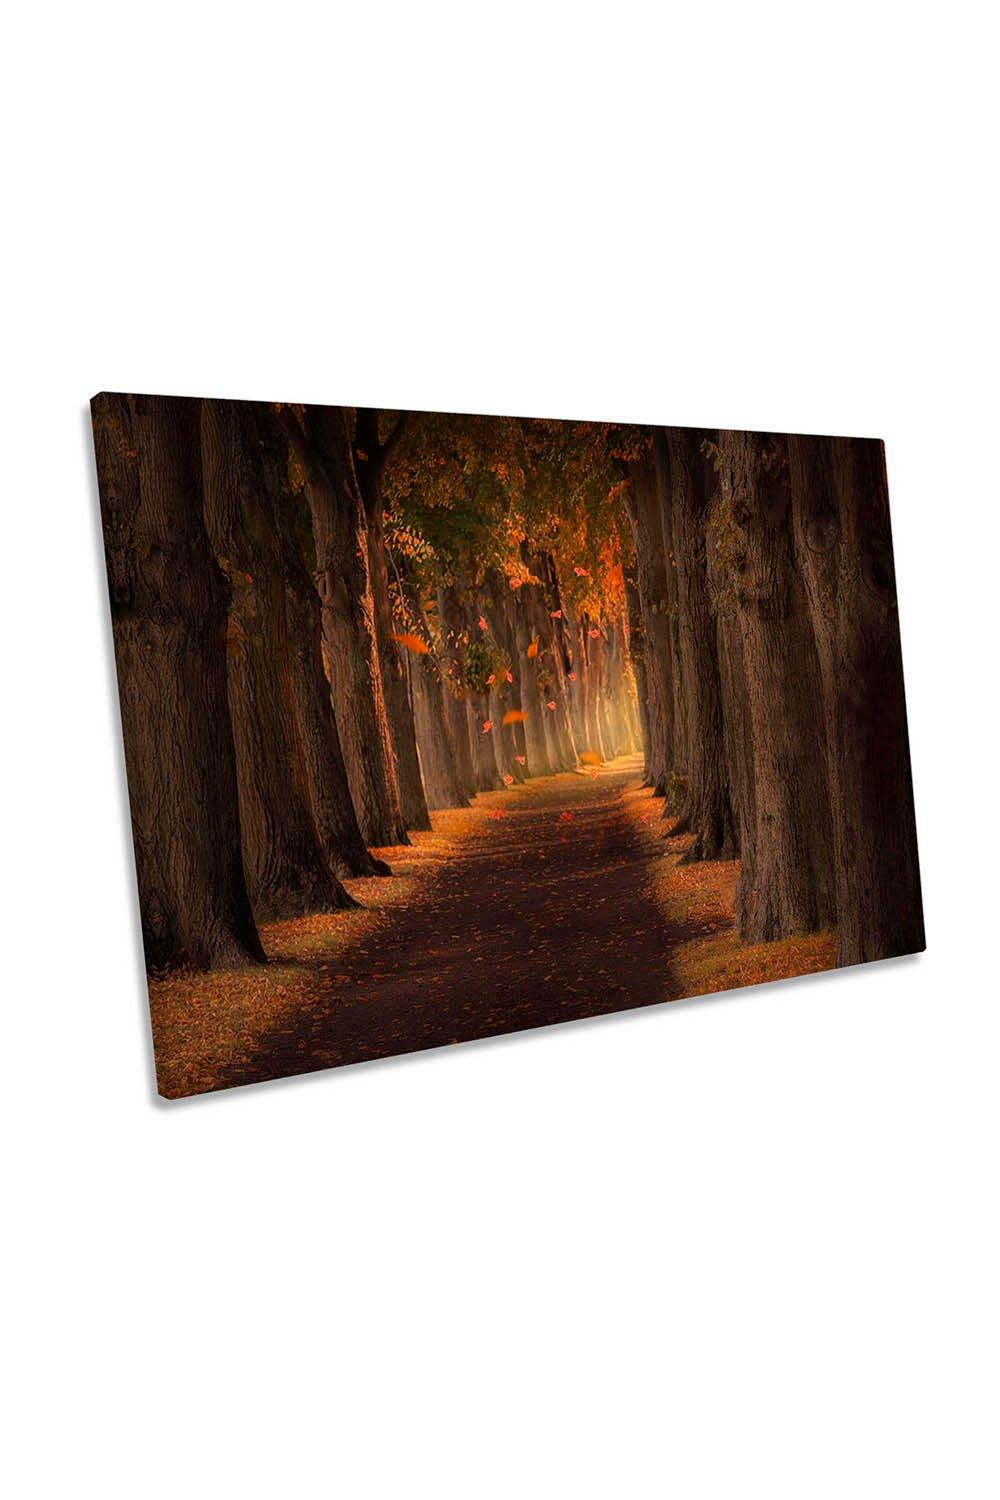 Autumn Park Pathway Tree Tunnel Orange Canvas Wall Art Picture Print